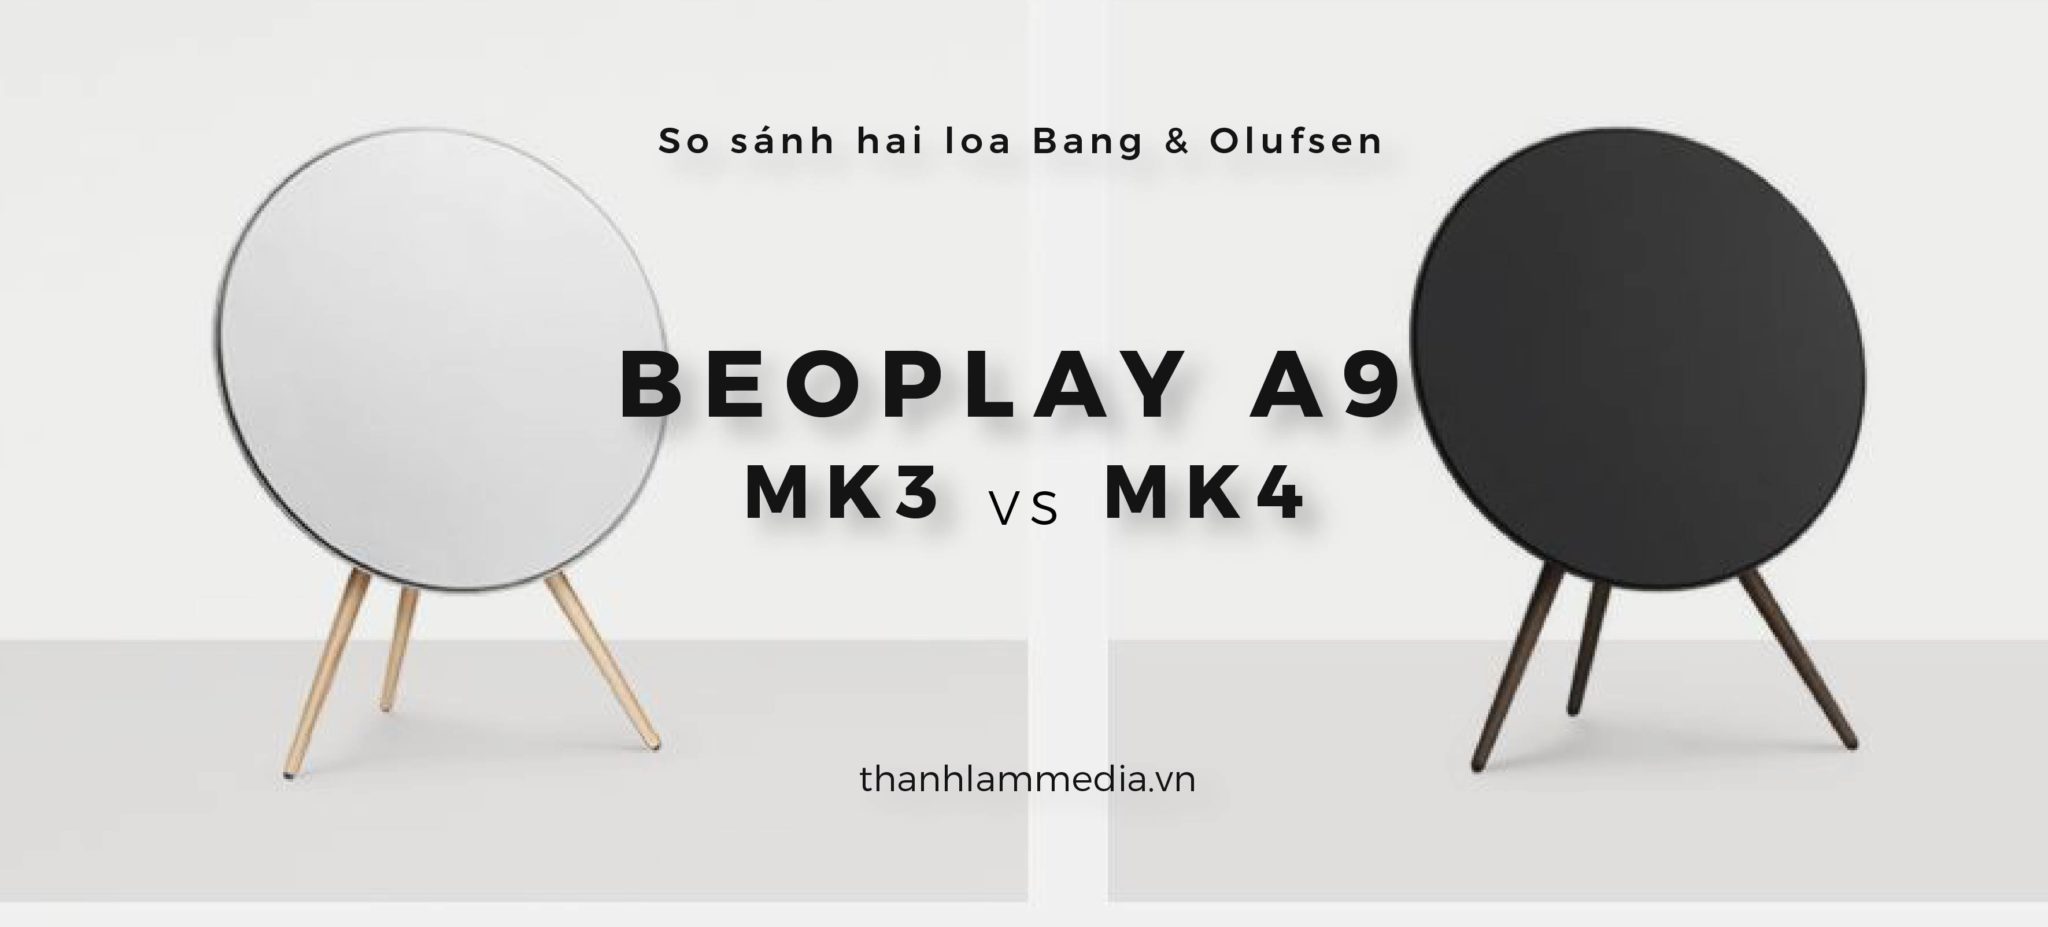 So sánh hai loa Beoplay A9 Mk3 và Beoplay A9 Mk4 44